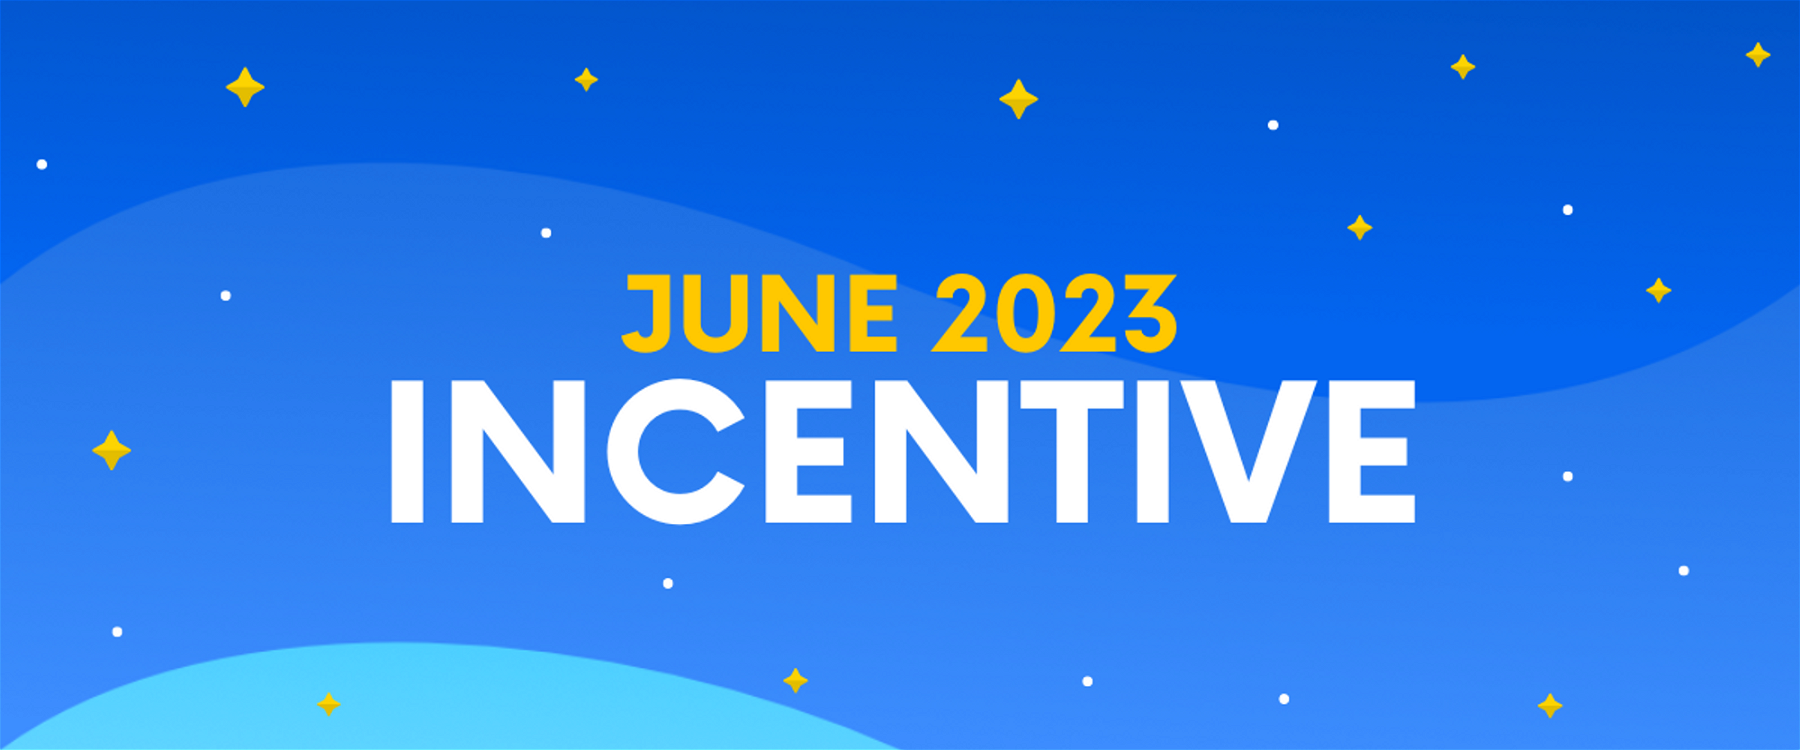 June 2023 Incentive